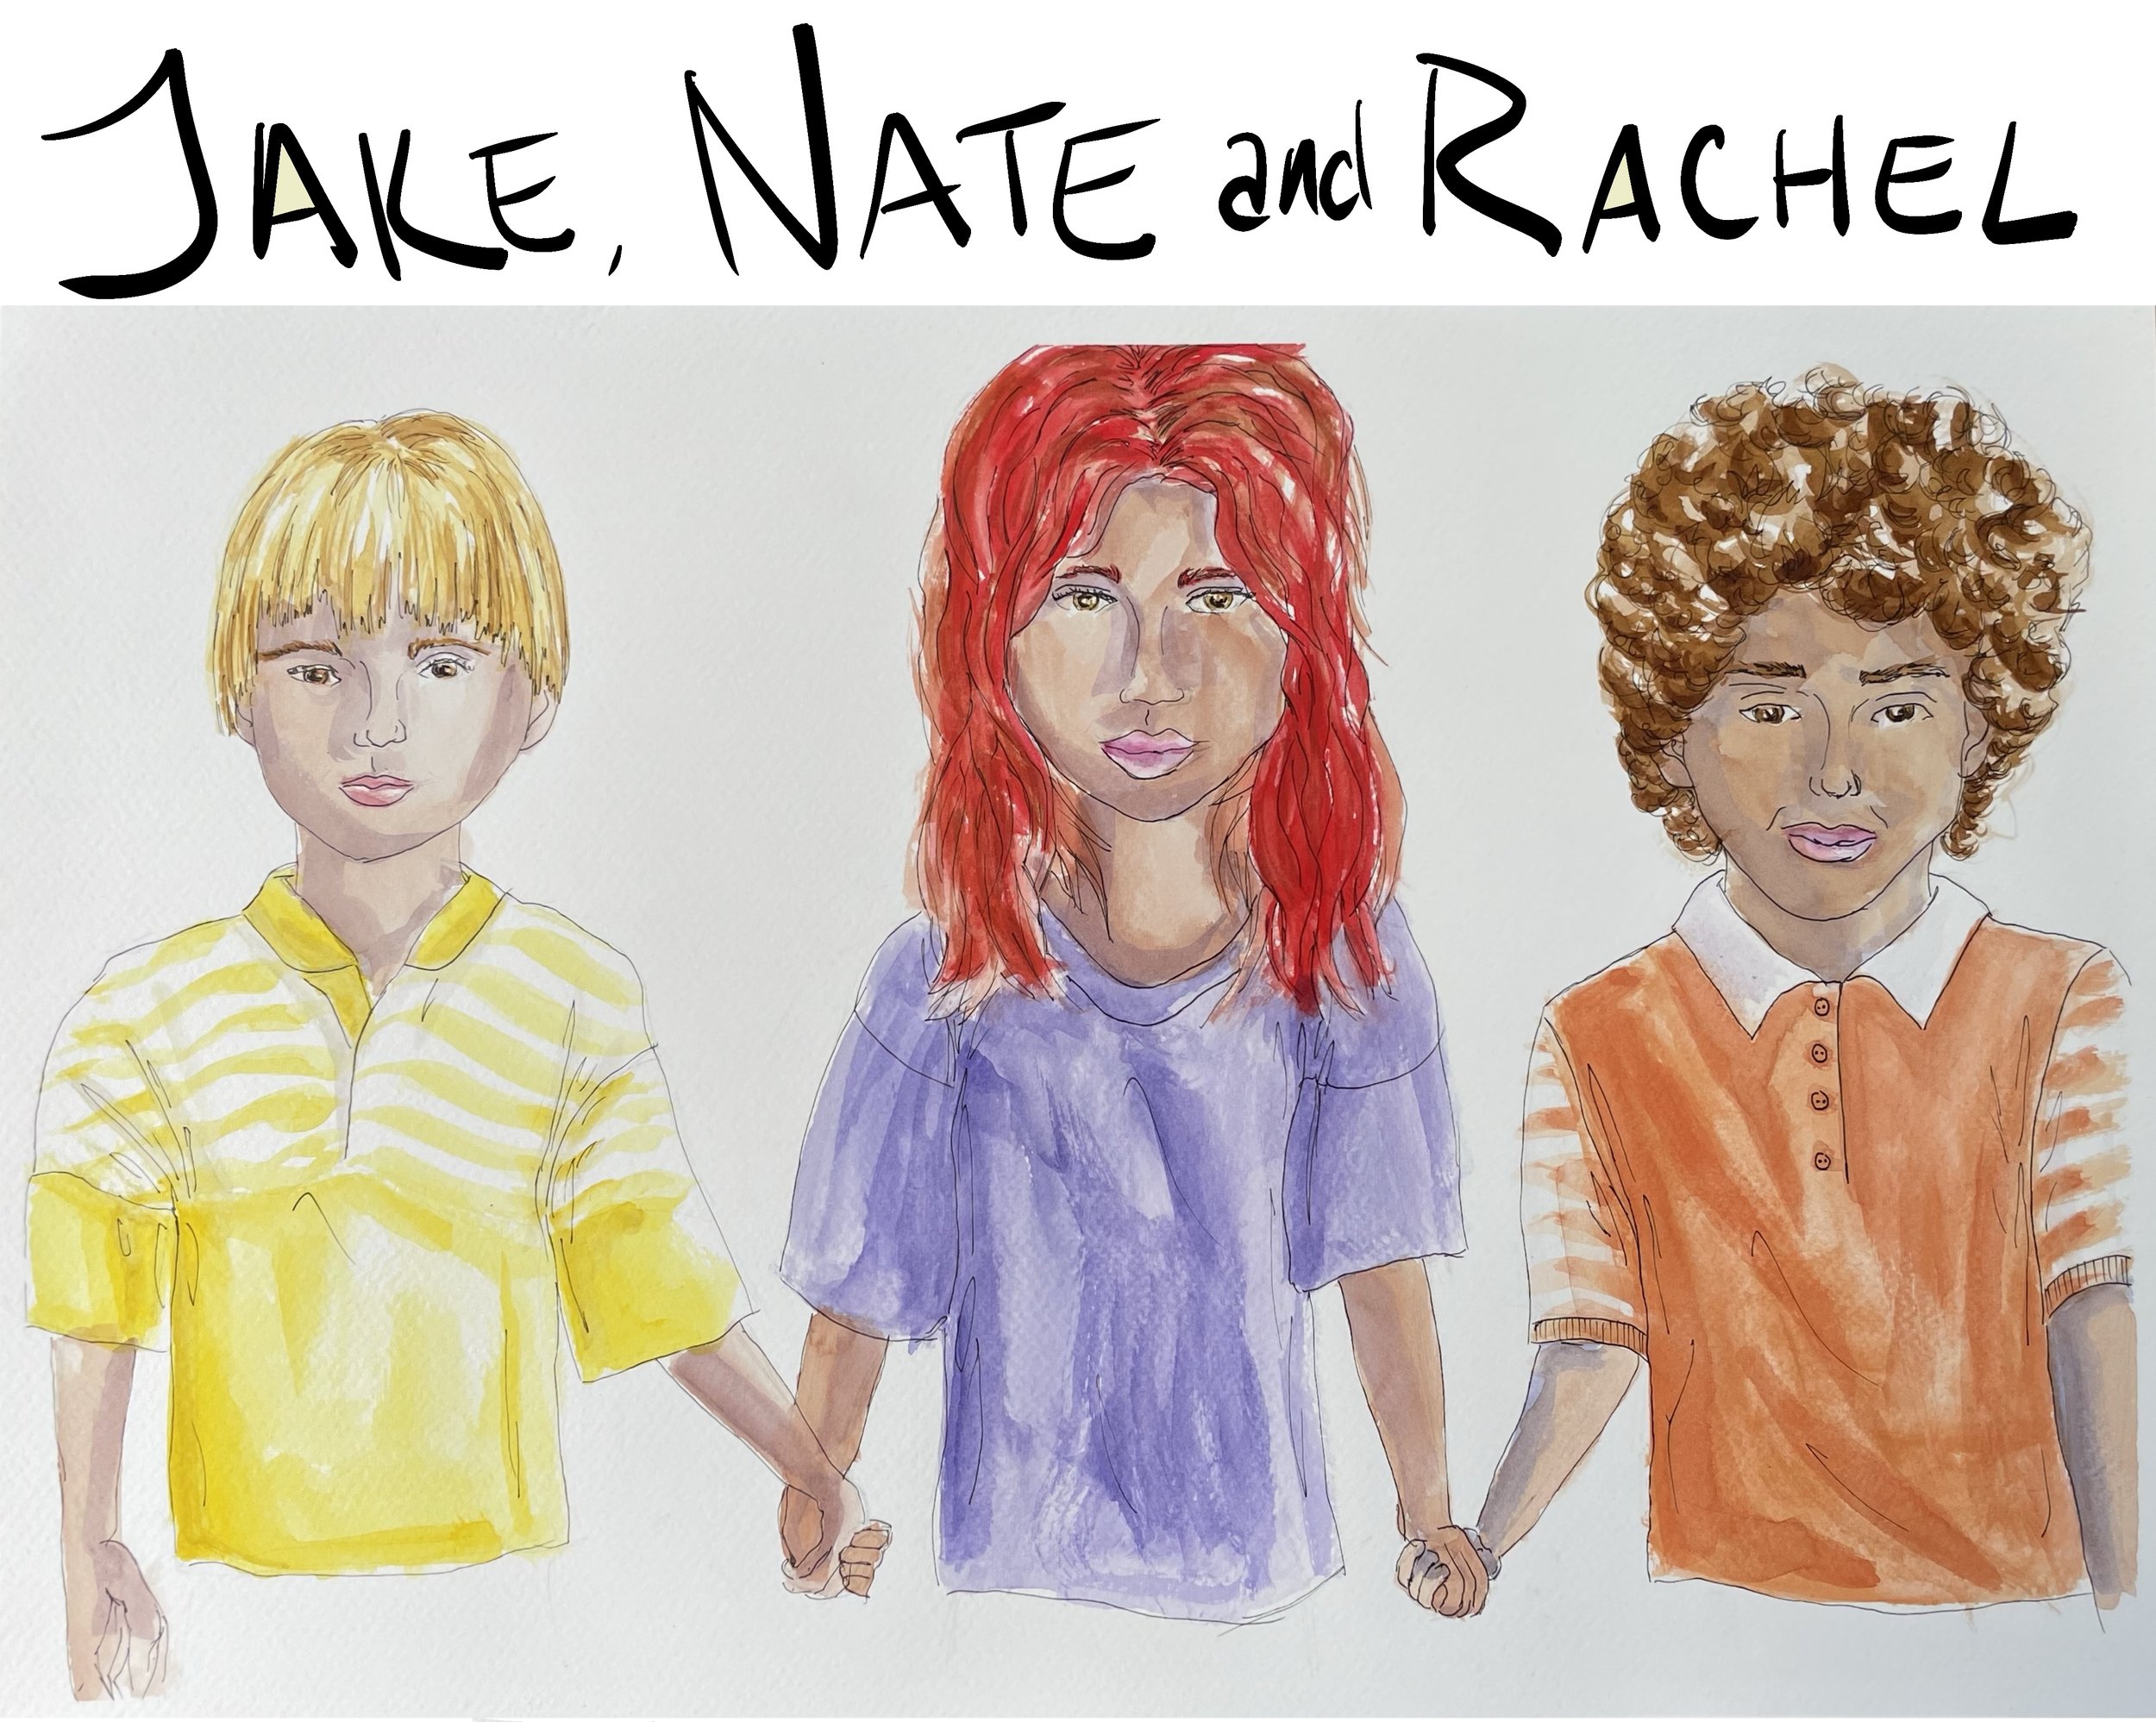 Jake, Nate and Rachel